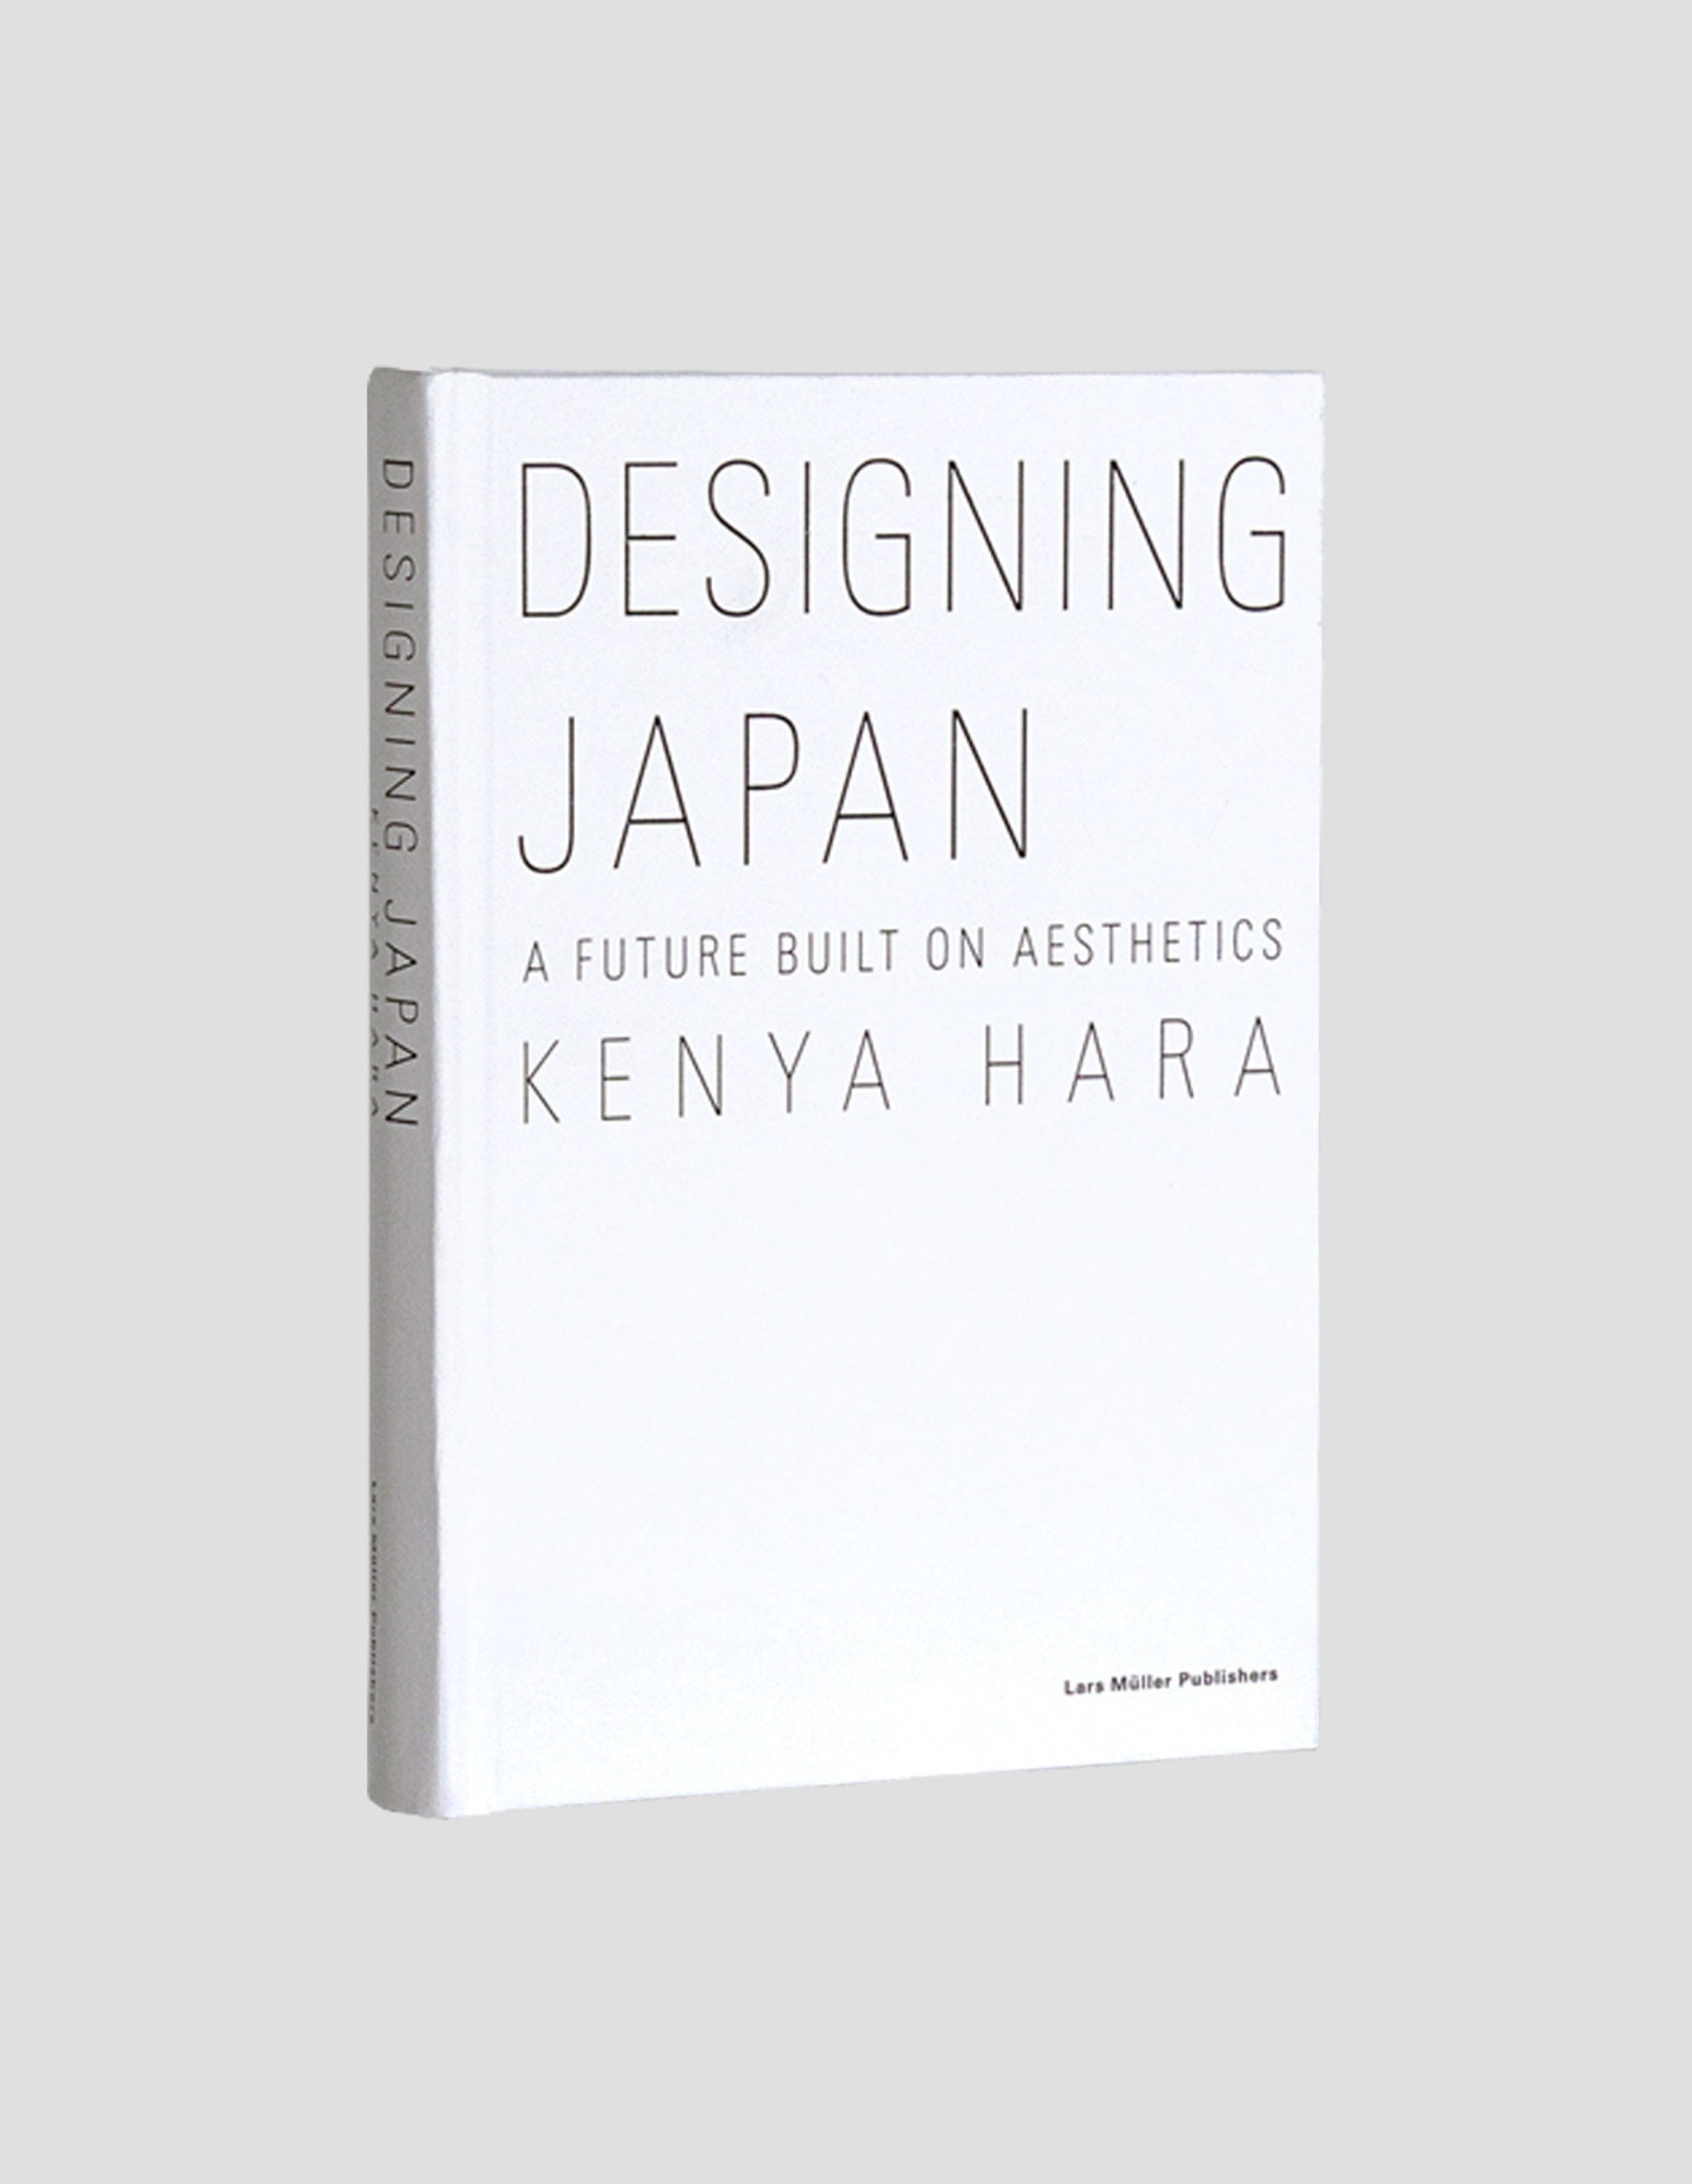 Designing Japan - A Future Built on Aesthetics von Kenya Hara